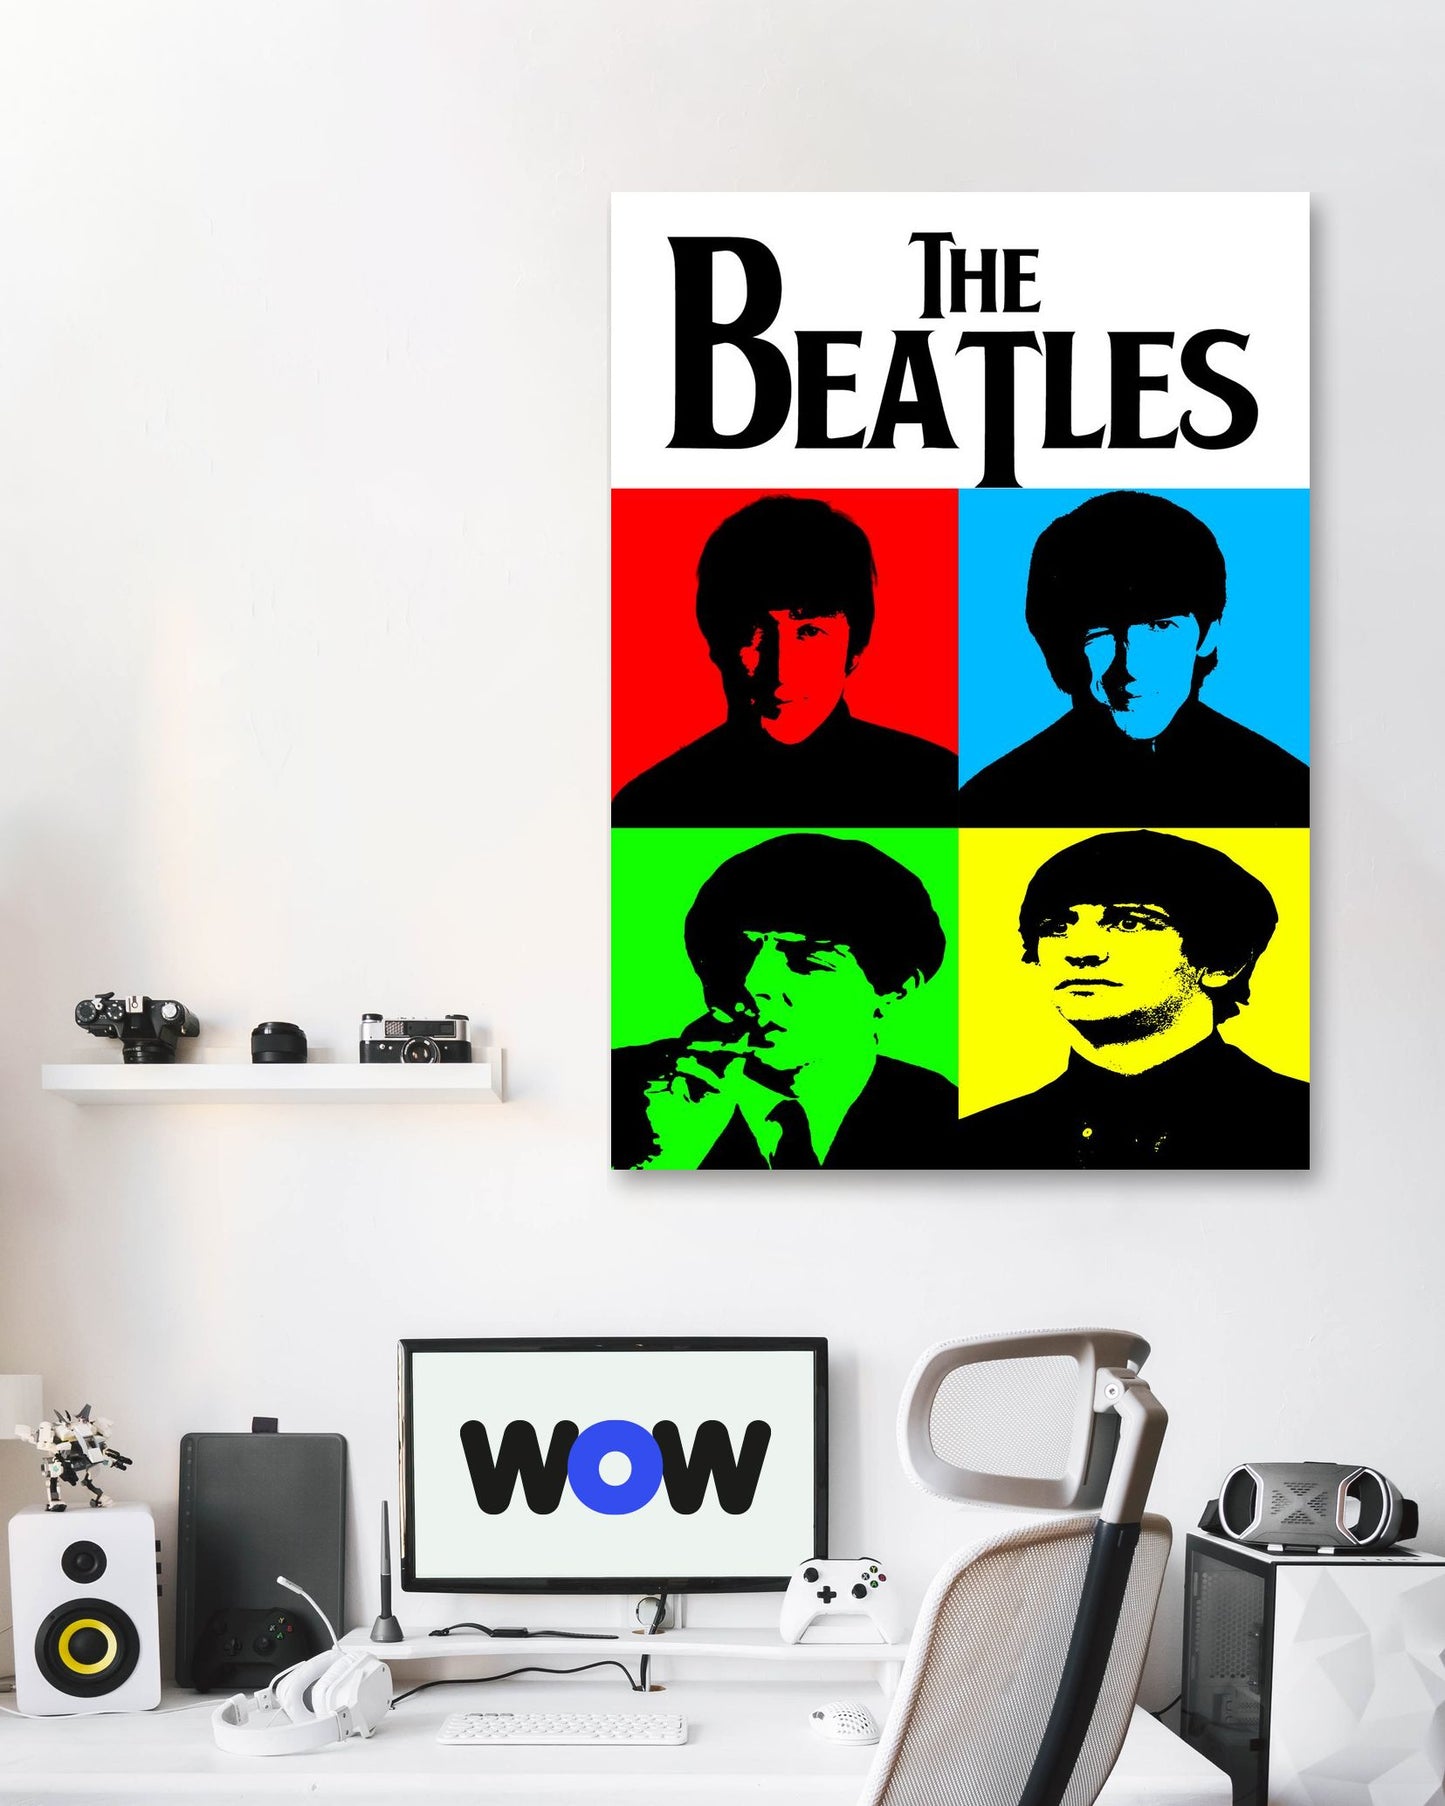 The Beatles band - @LegendArt